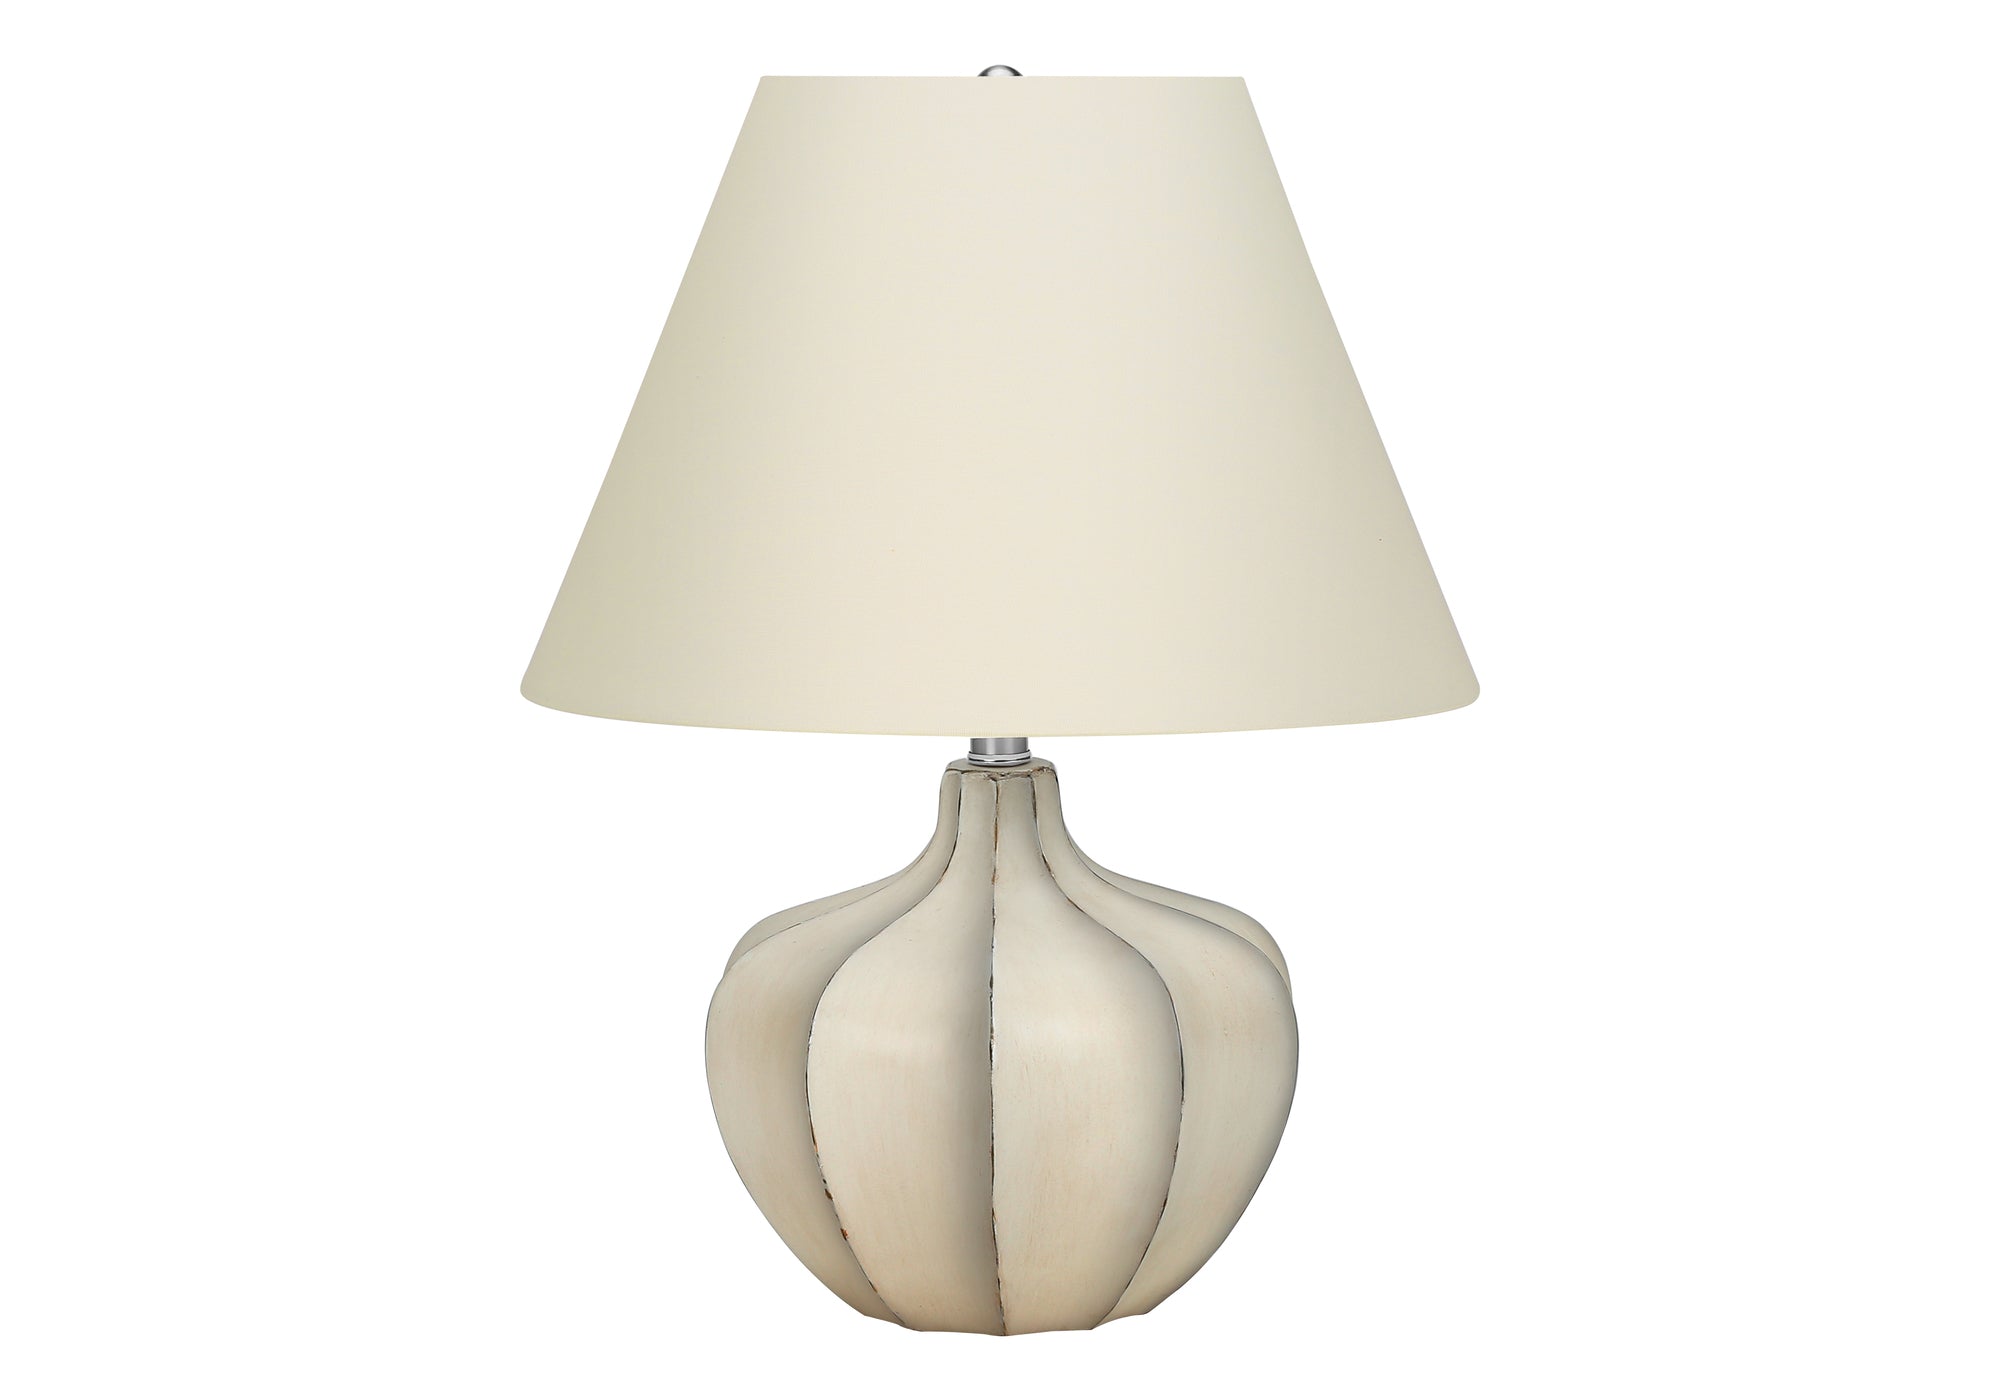 MN-679733    Lighting, 21"H, Table Lamp, Cream Resin, Ivory / Cream Shade, Transitional